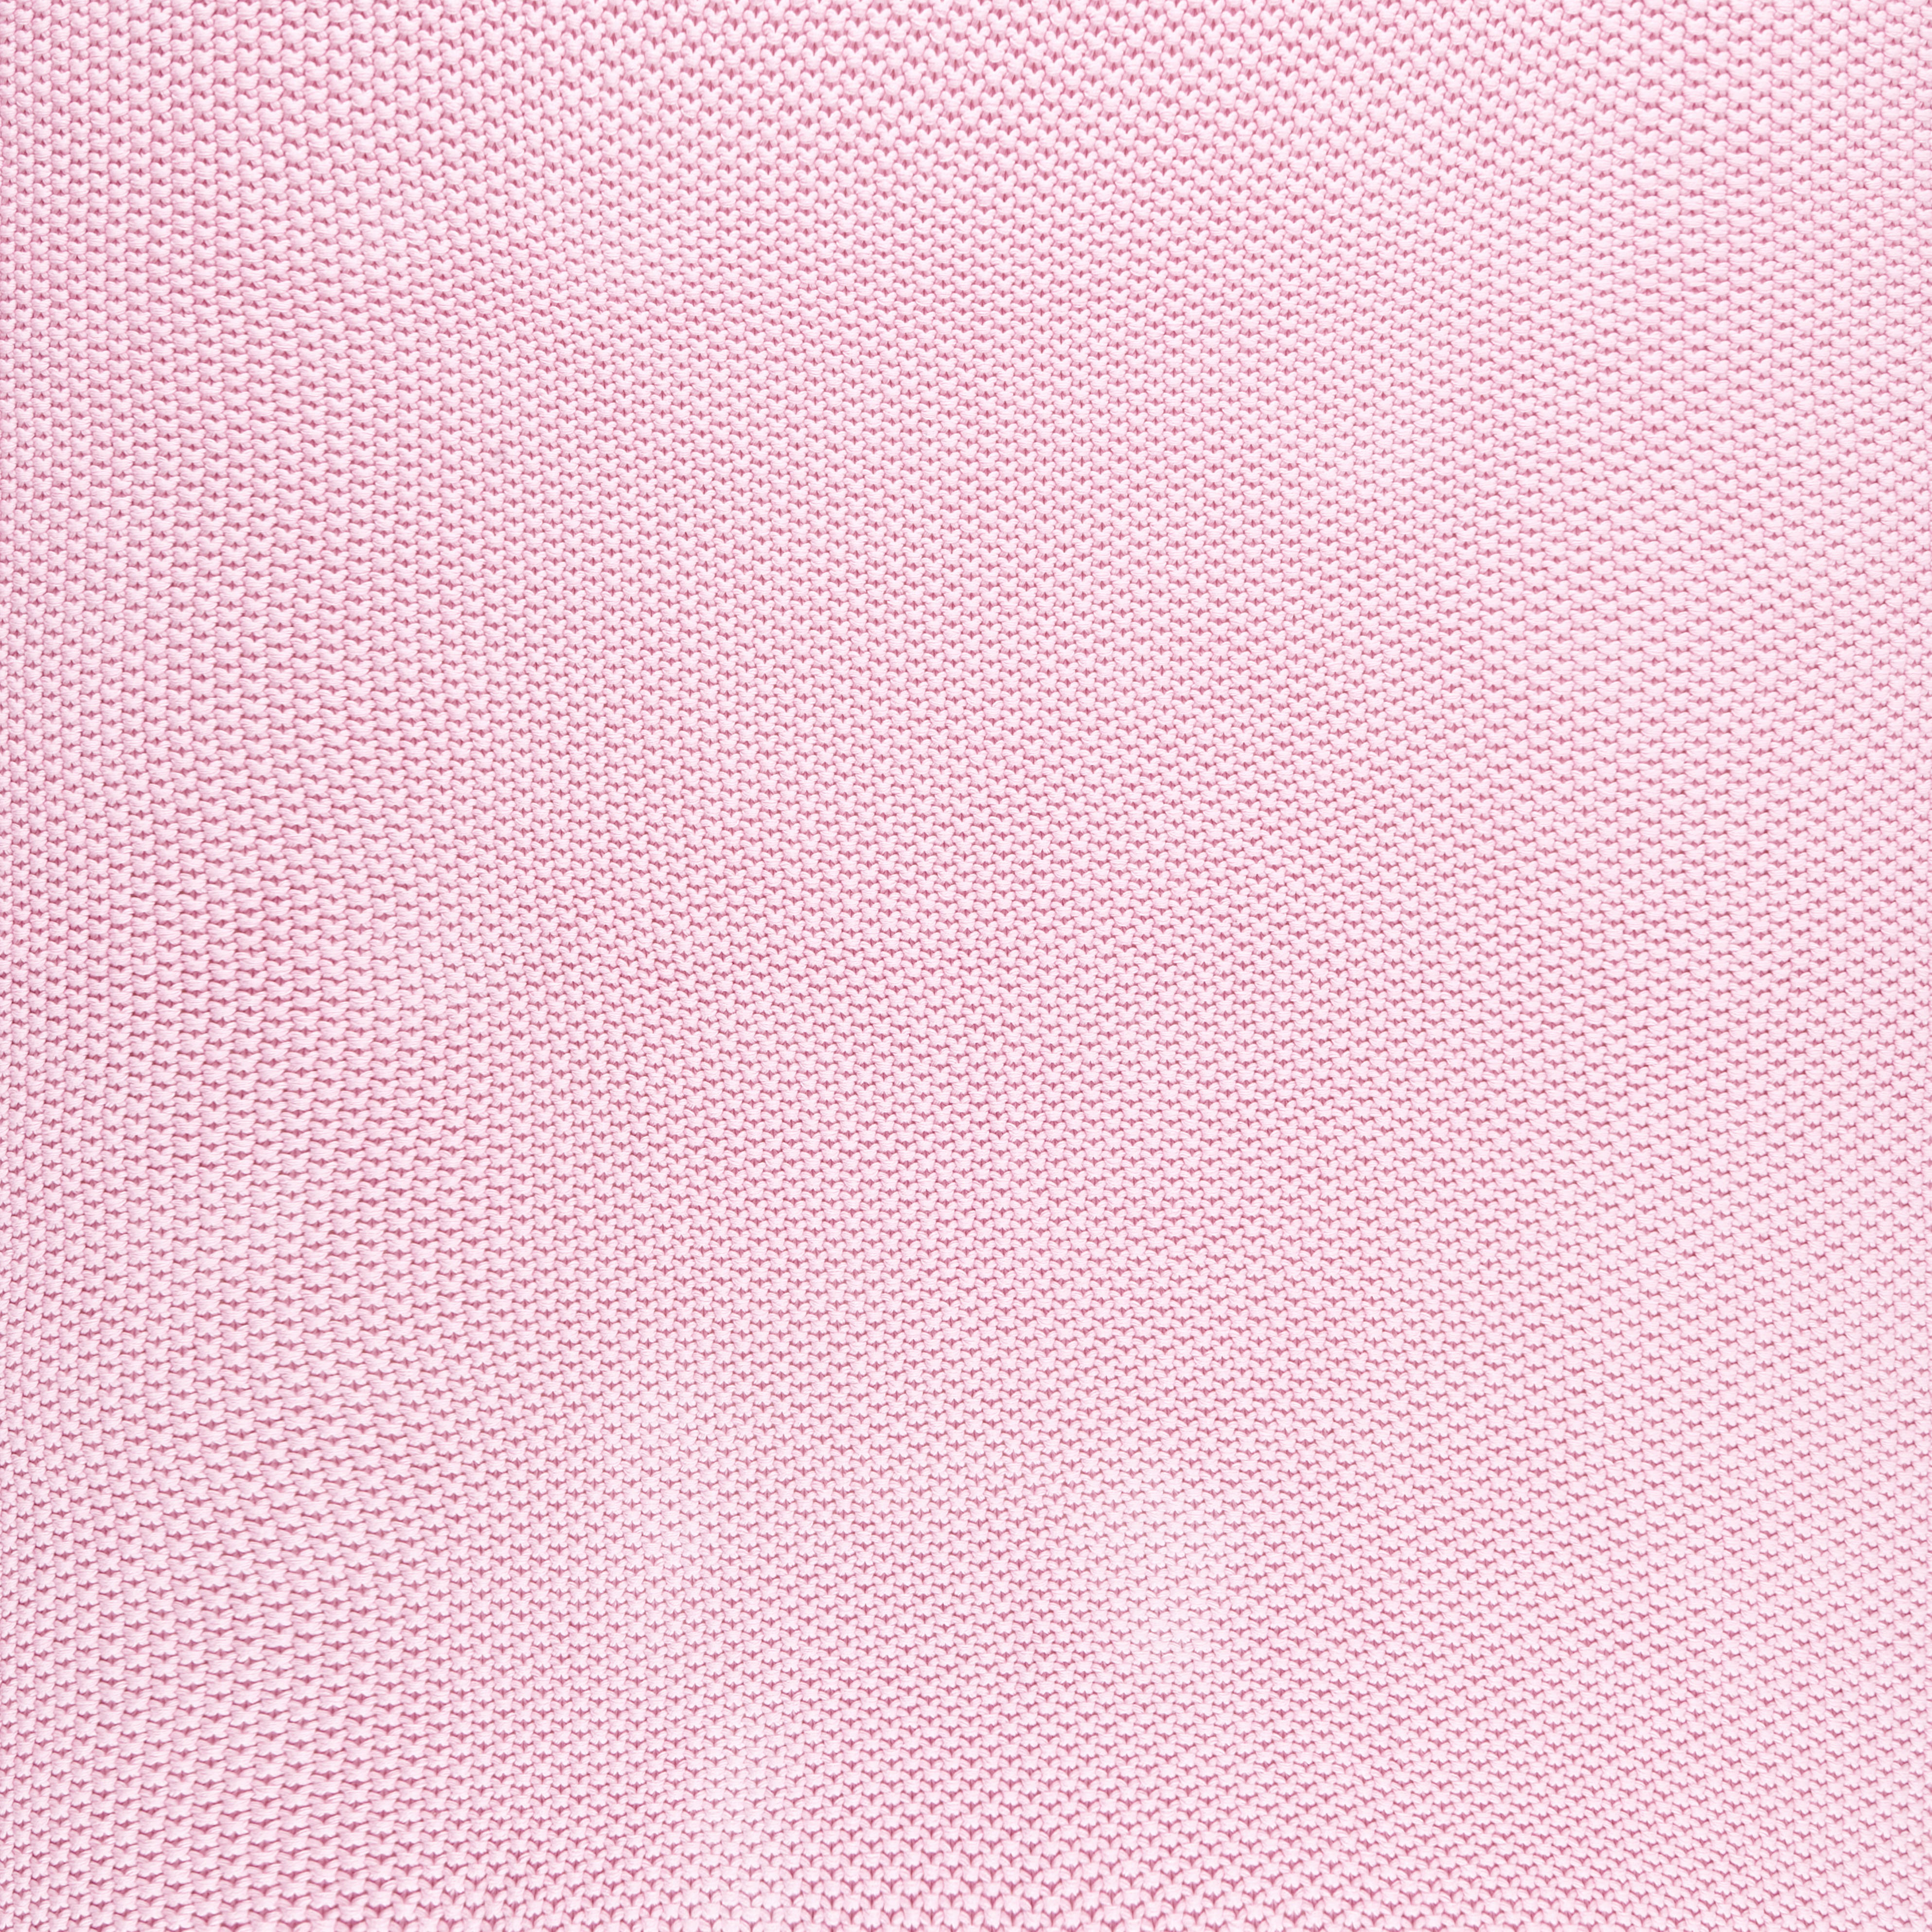 MEKANO ĆEBE 80/100 cm  - ružičasta, Trendi, tekstil (80/100cm) - Avelia